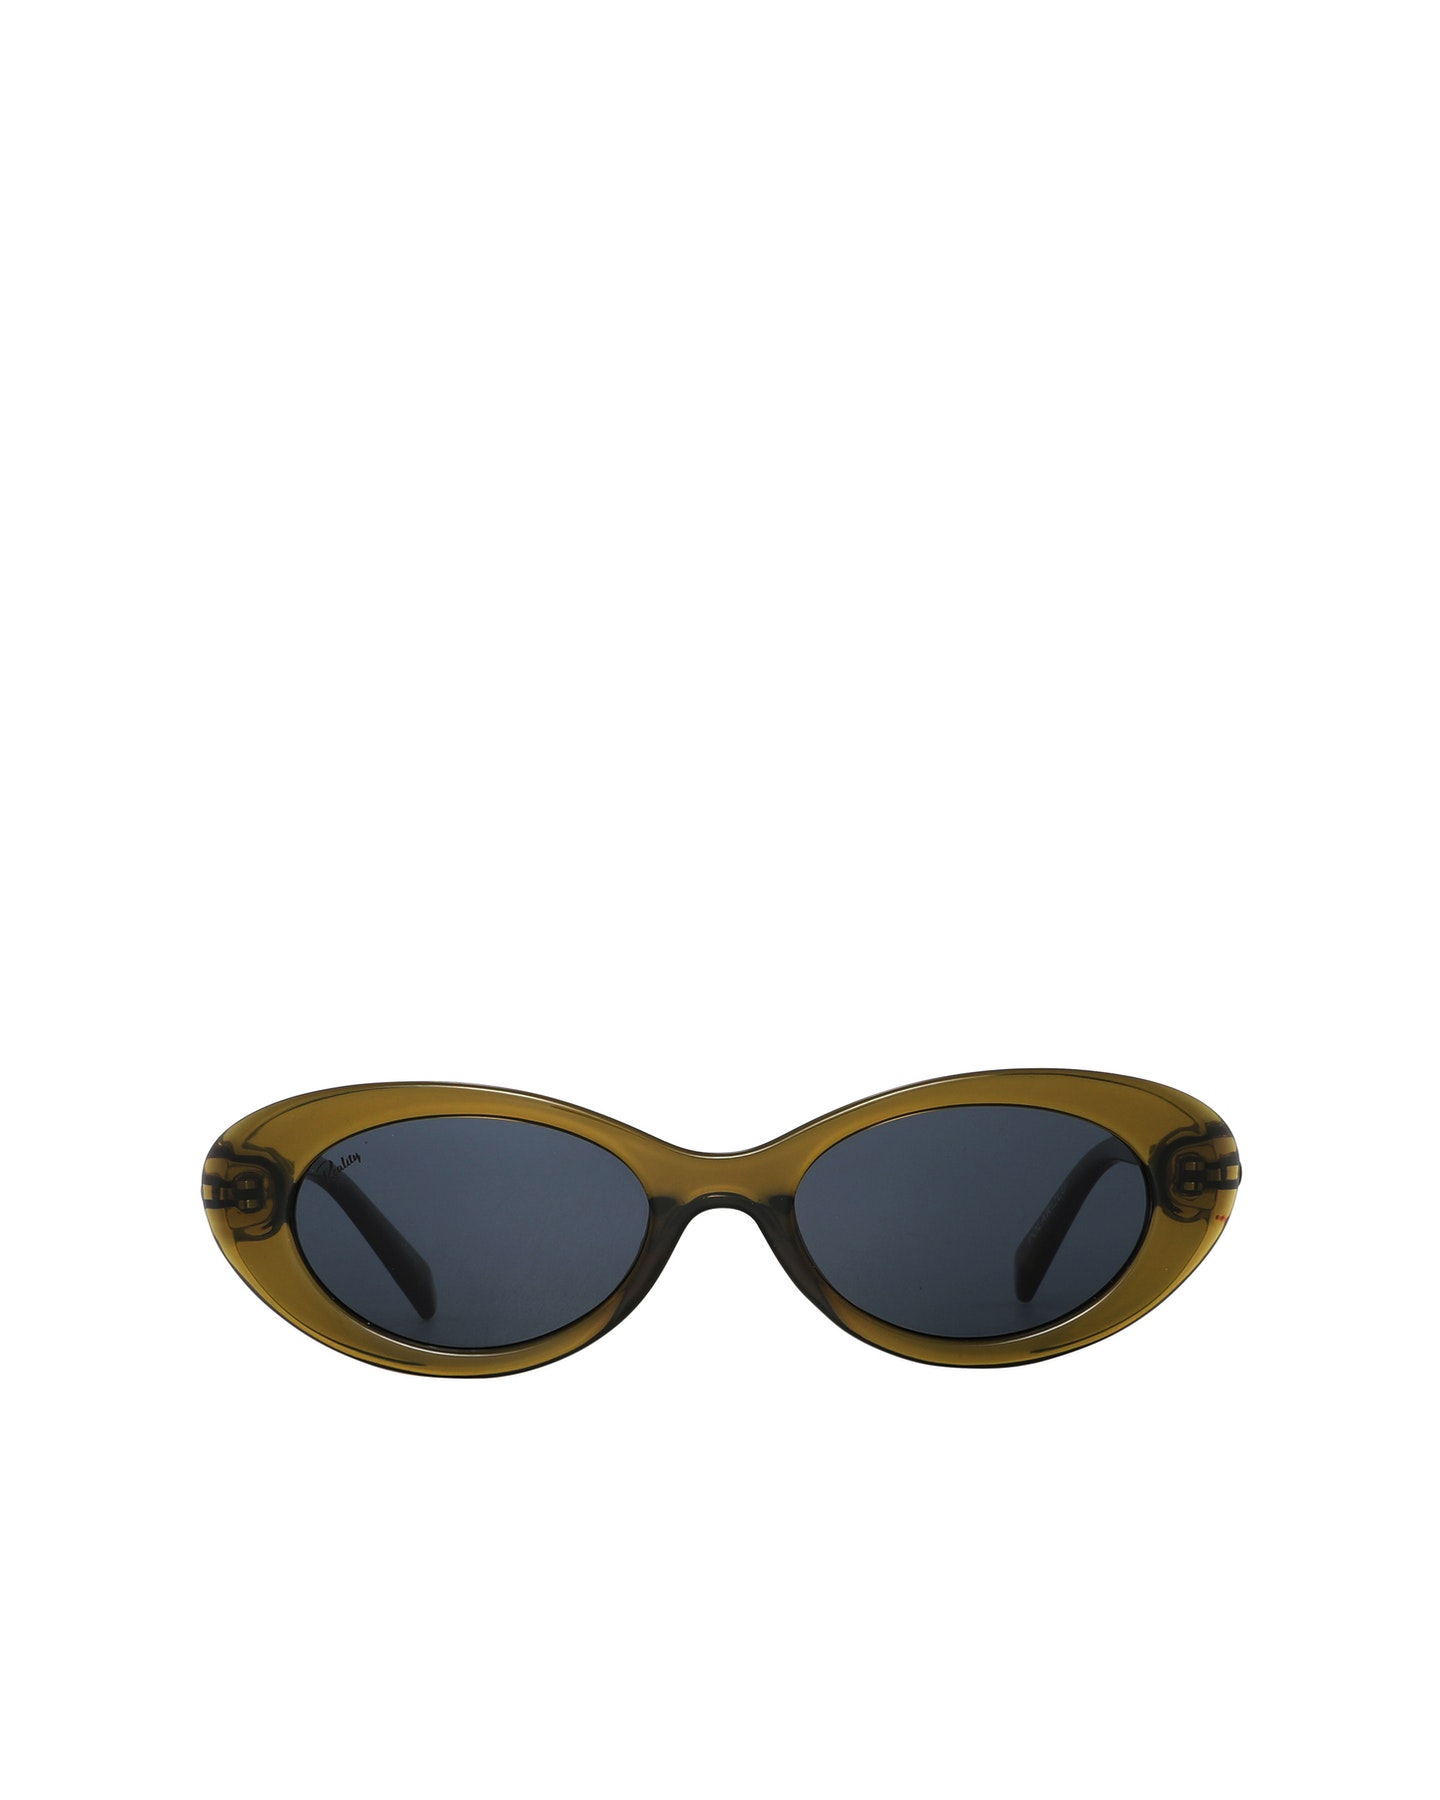 Reality Eyewear High Society Sunglasses - Olive | SurfStitch